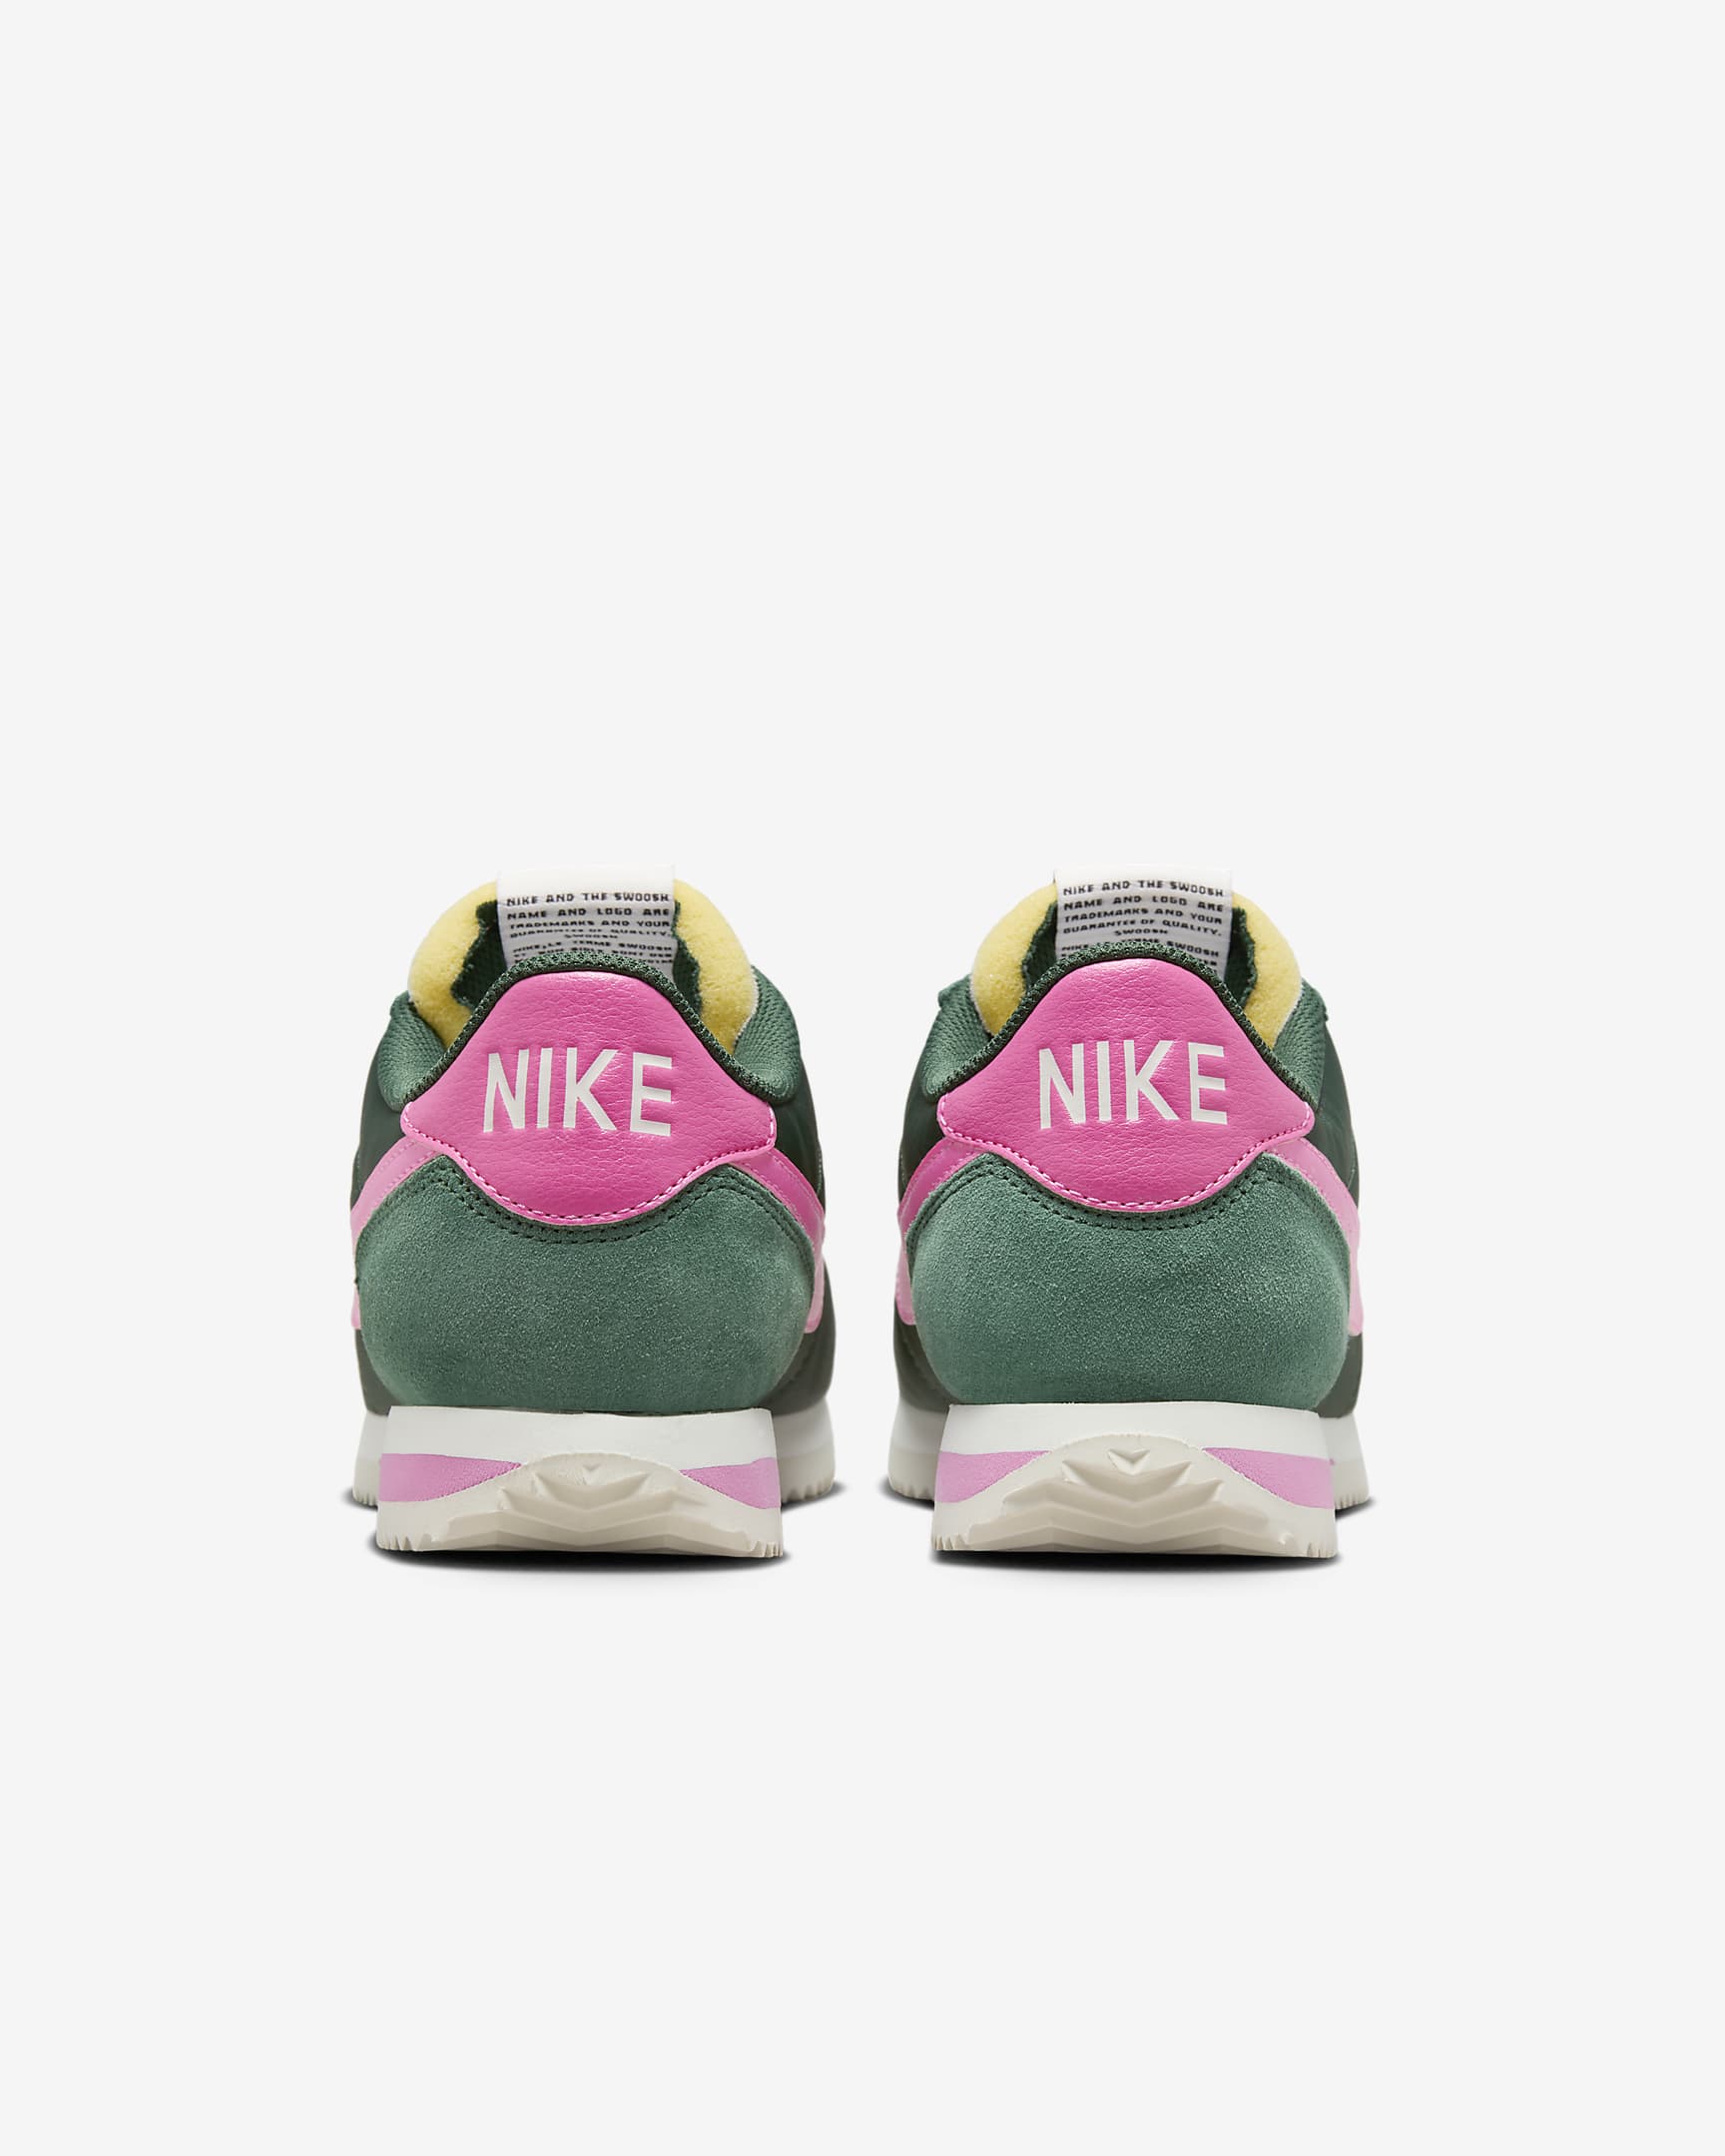 Sko Nike Cortez Textile - Fir/Sail/Team Orange/Pinksicle